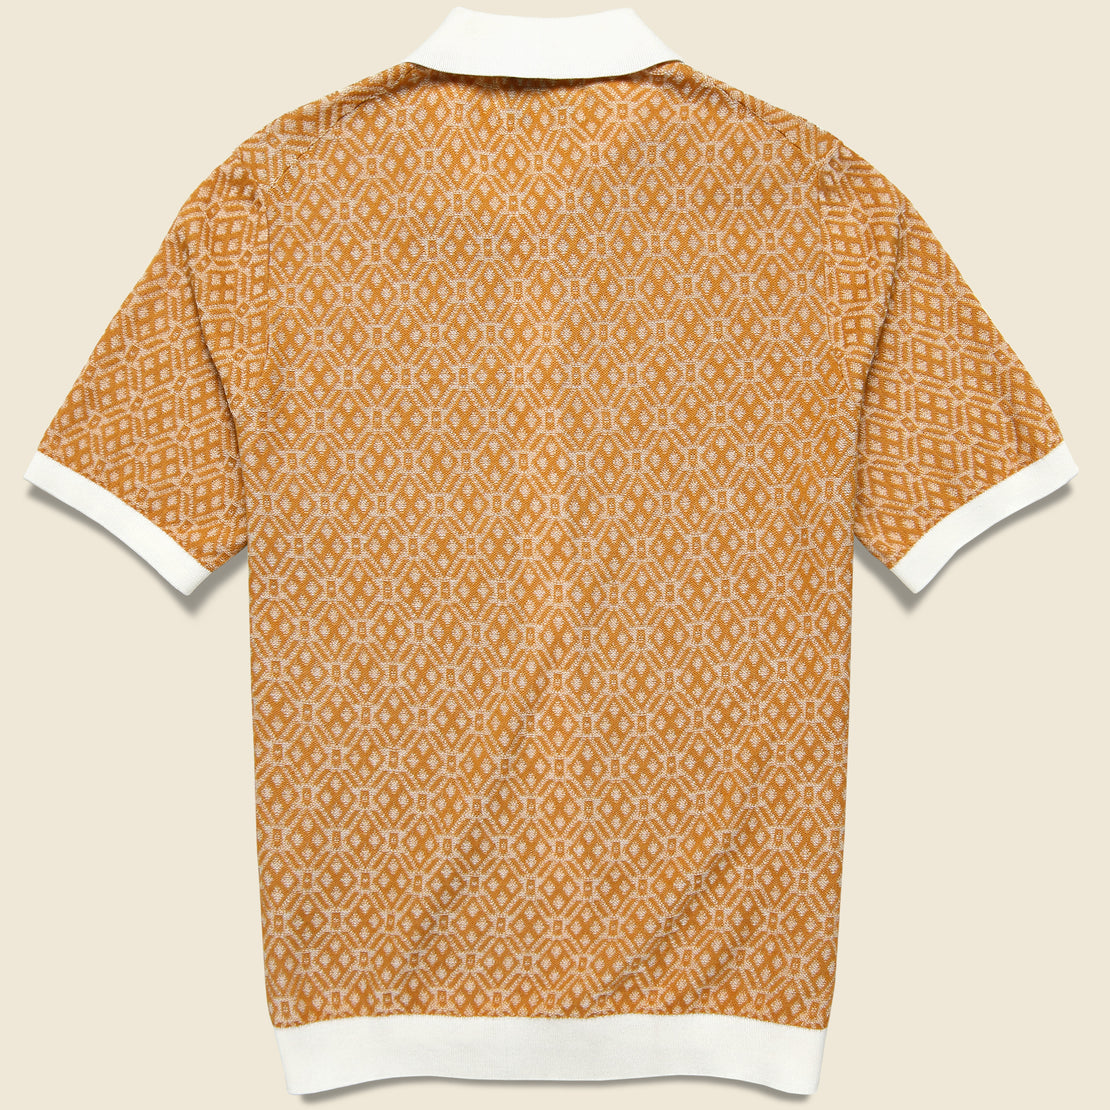 Tellaro Shirt - Tile Knit Mustard - Wax London - STAG Provisions - Tops - S/S Knit